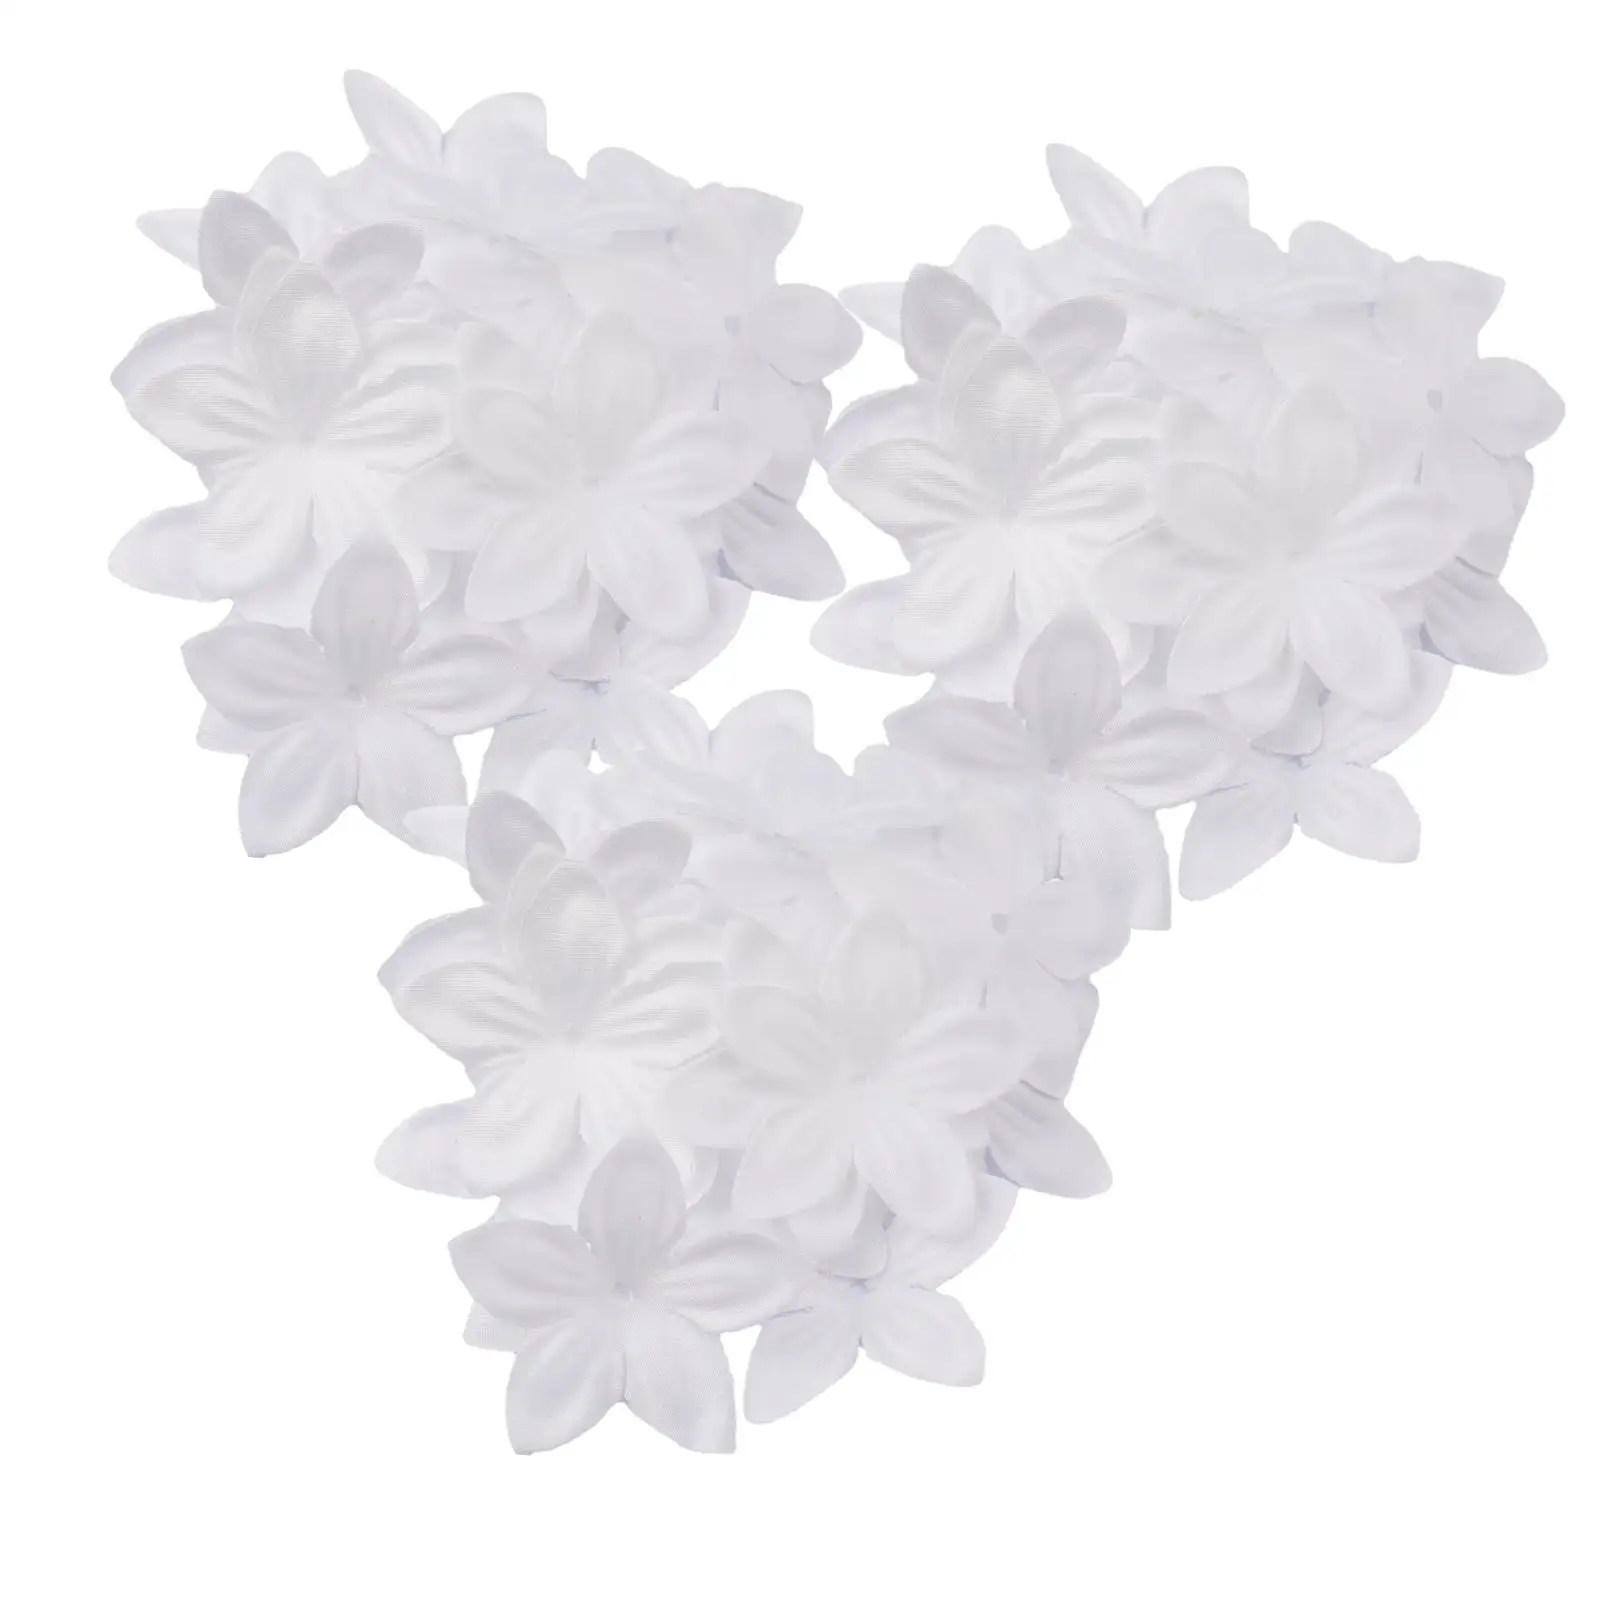 300 Pieces Artificial Silk Flower Petals Scatter Petals for Flower Girl Basket Bouquet Wedding Party Wreath Table Centerpieces